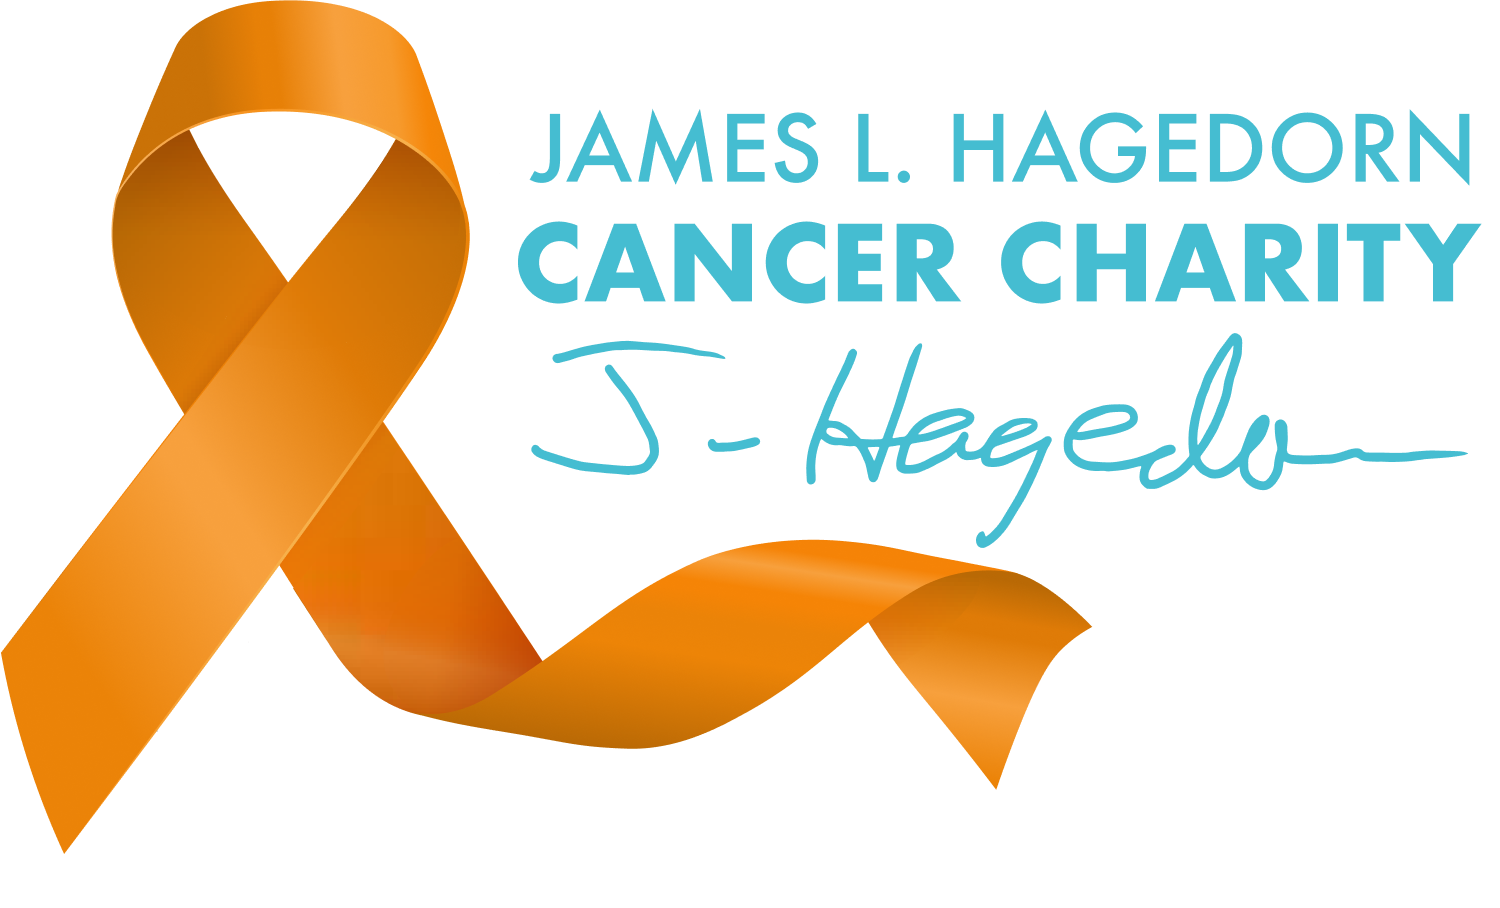 James L. Hagedorn Cancer Charity